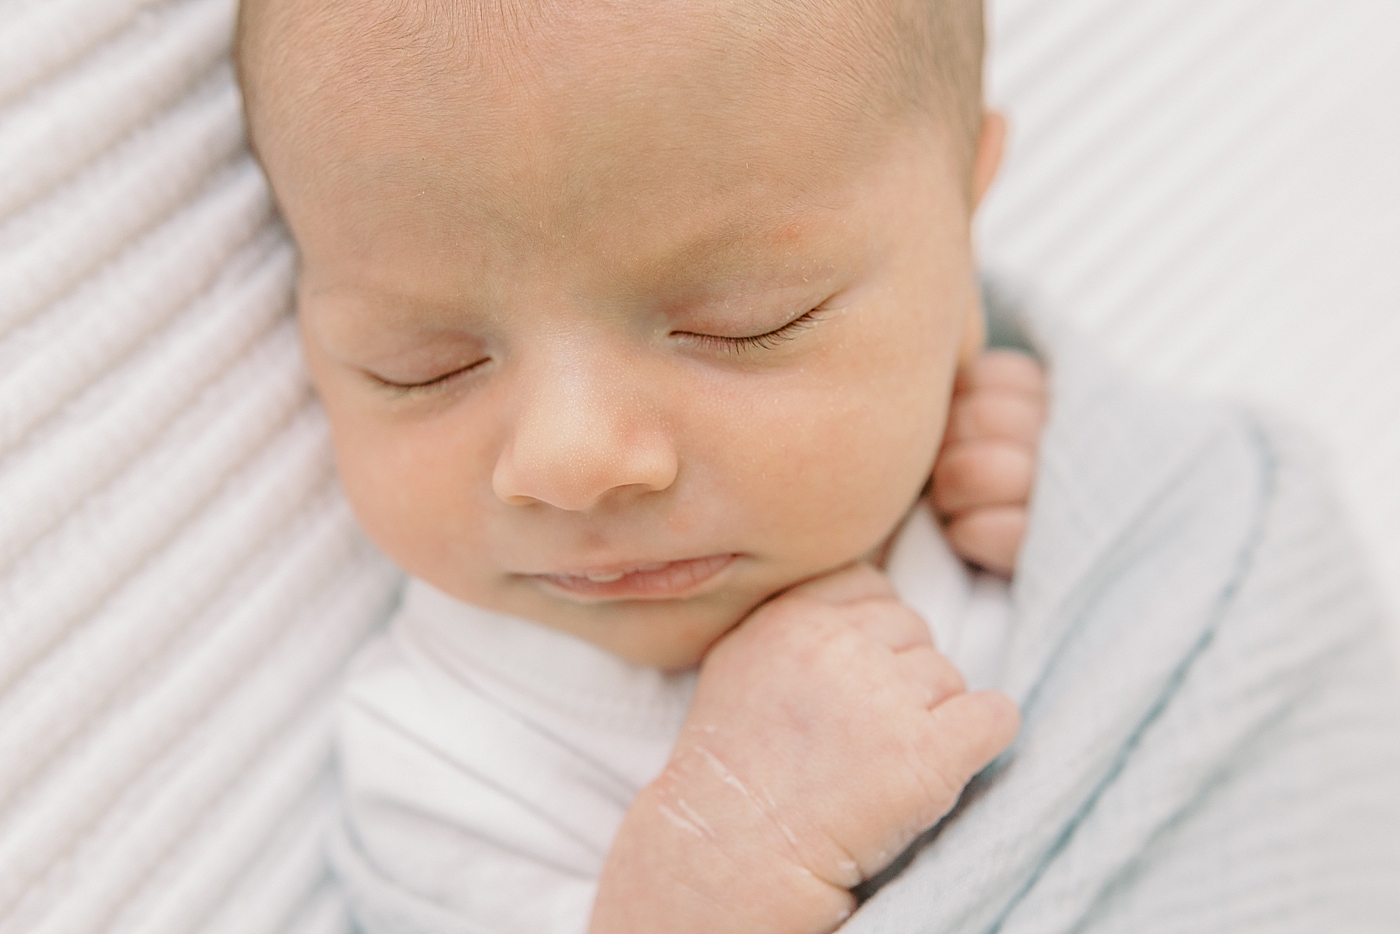 Detail of sleeping newborn baby's eyelashes | Image by Caitlyn Motycka